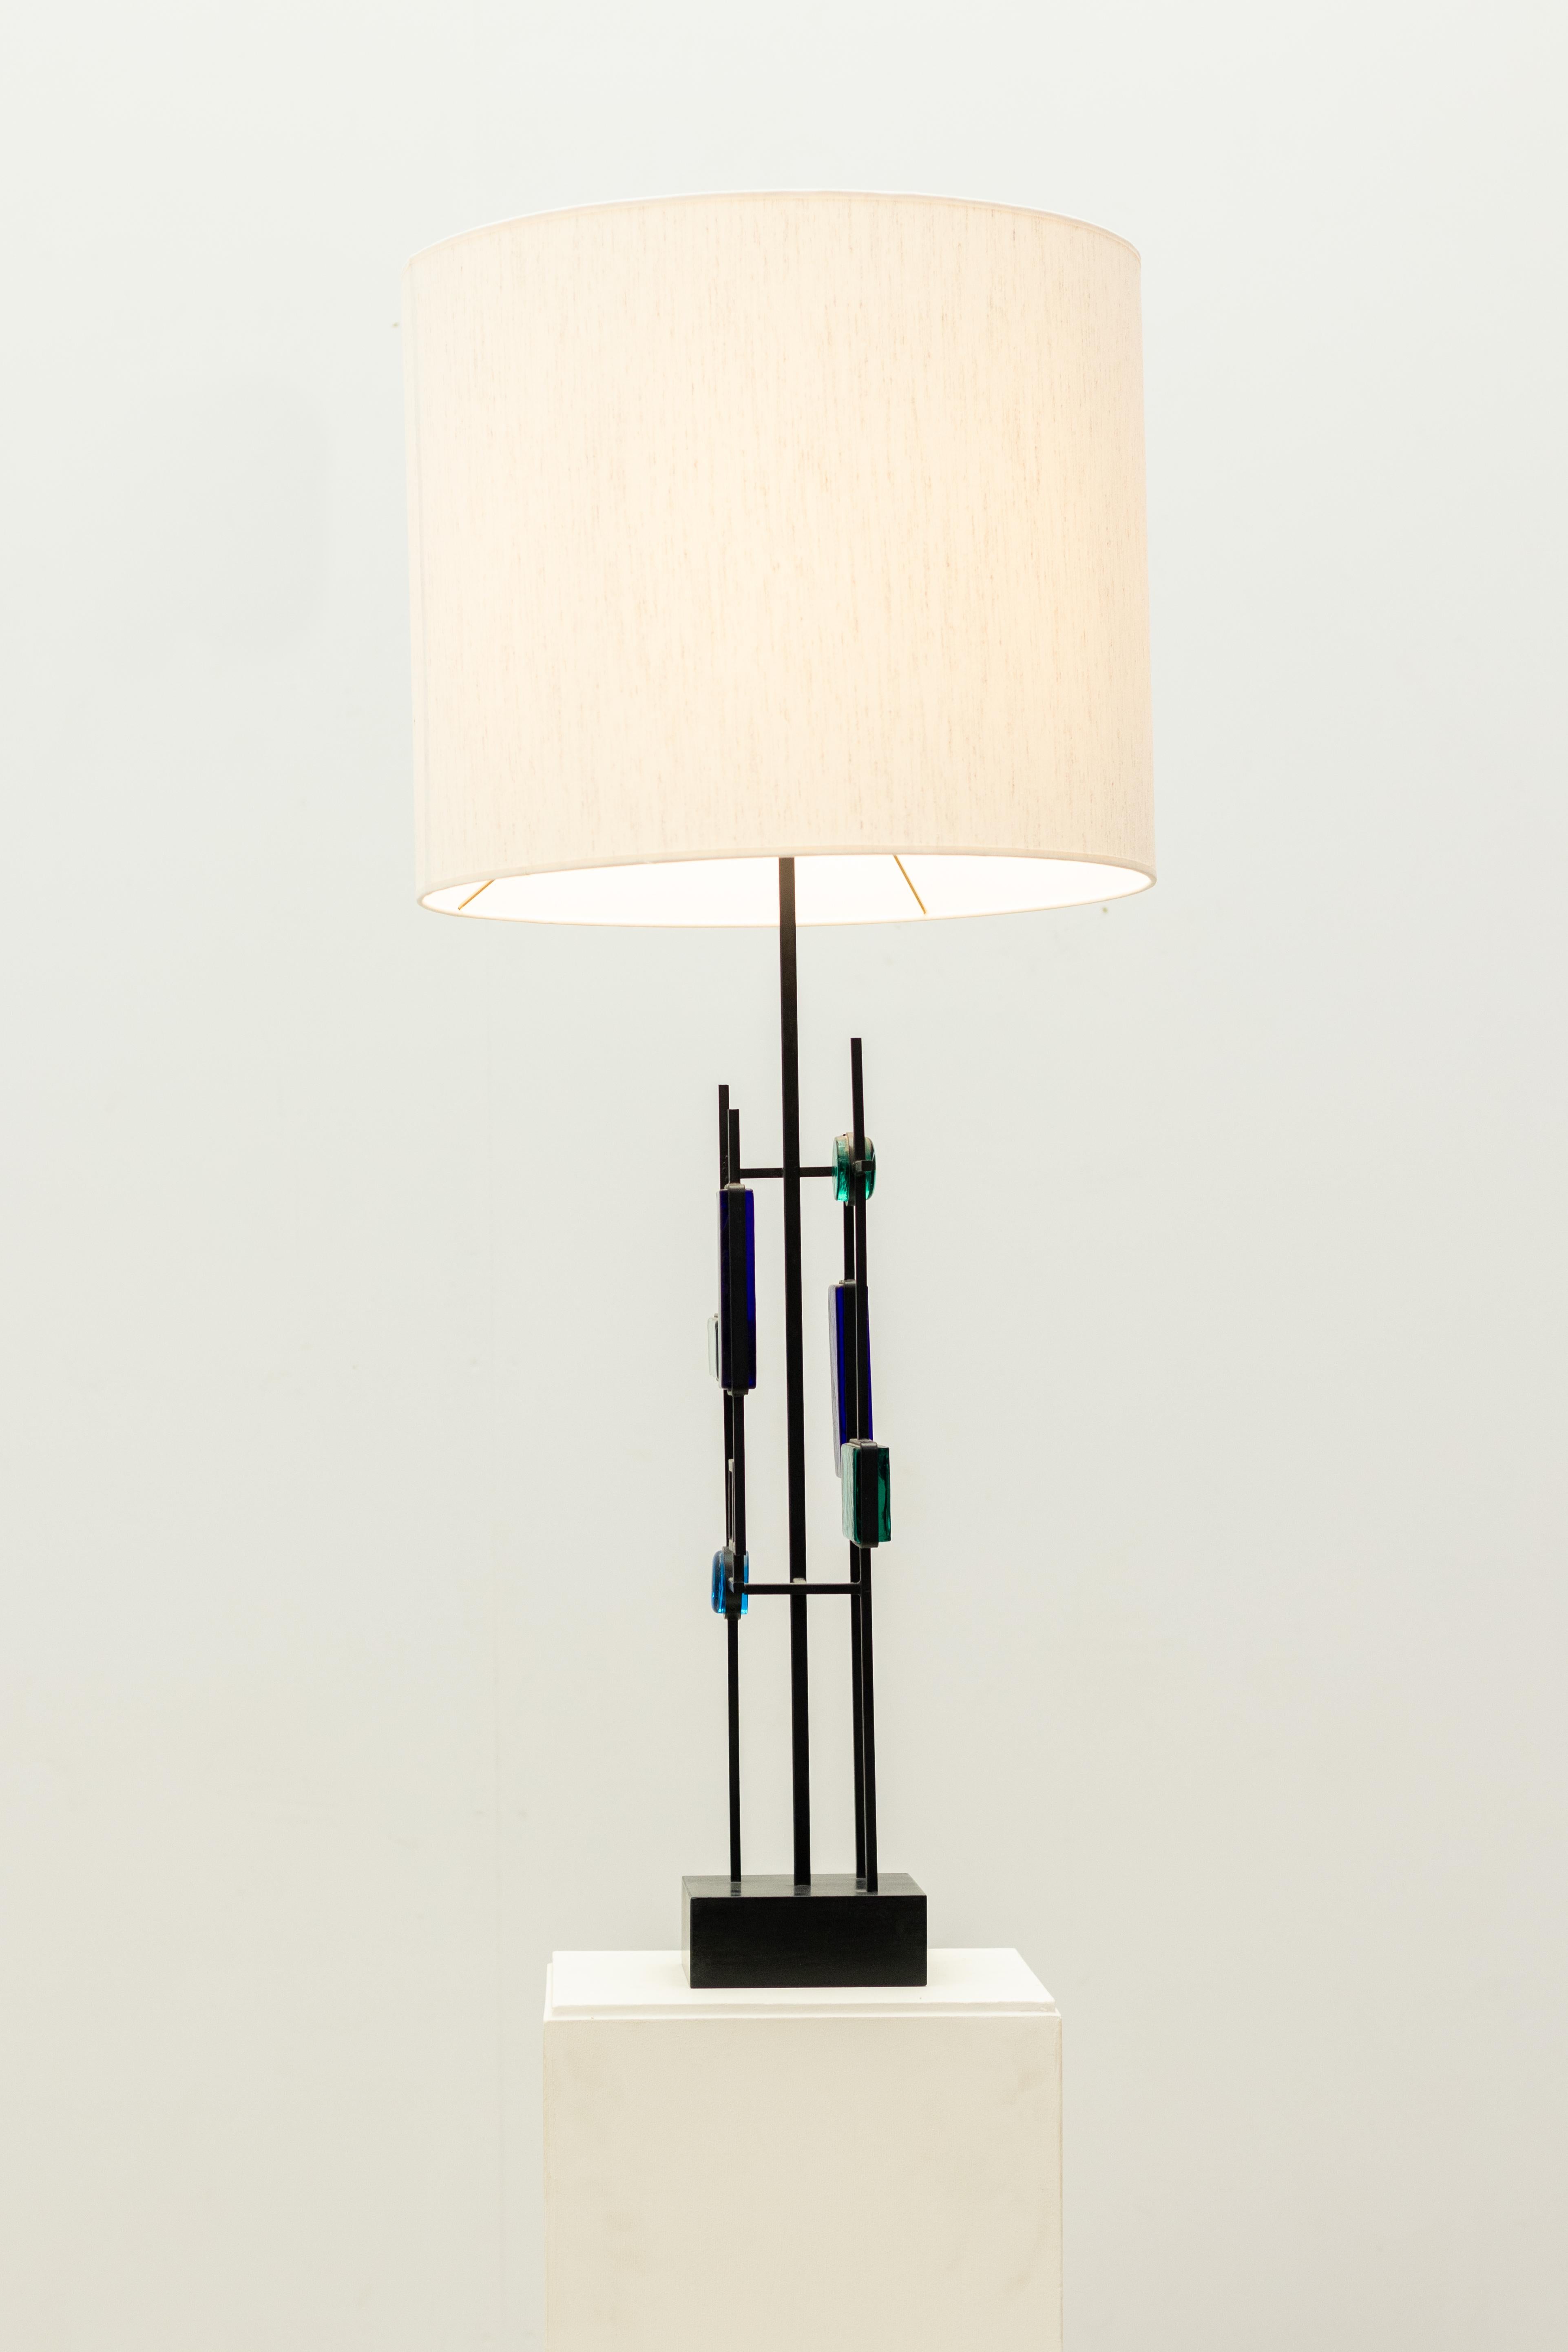 Glass table lamp by Svend Aage Holm Sørensen for Holm Sørensen & Co, 1960s For Sale 1